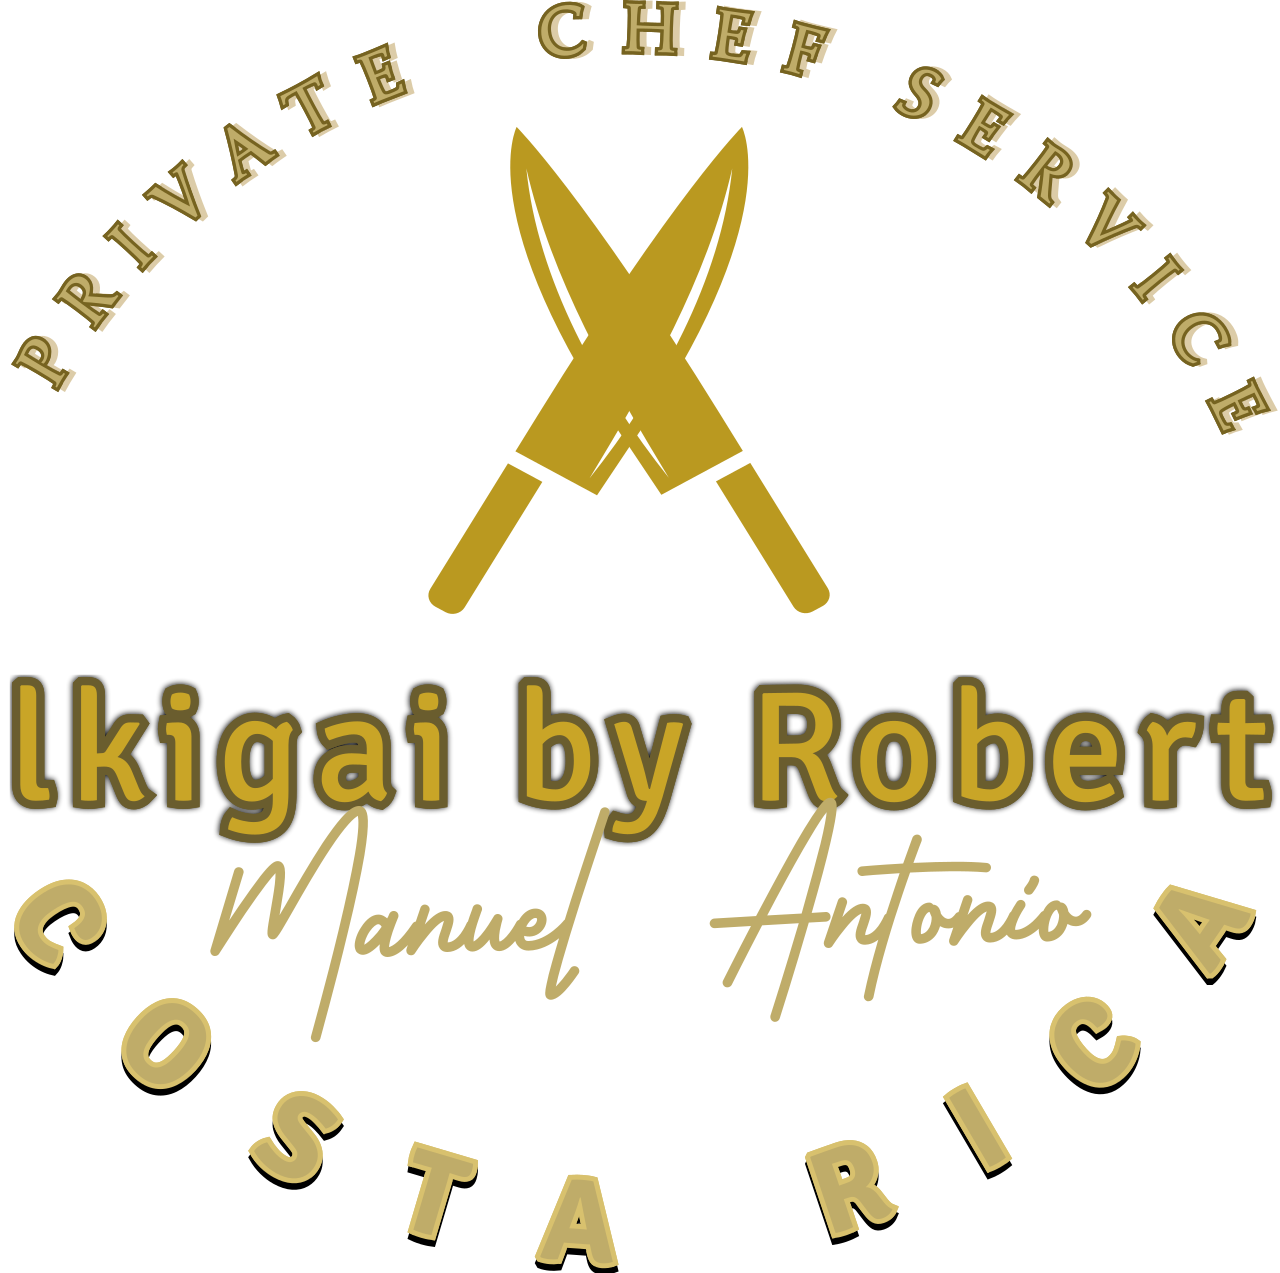 lkigai by Robert 's logo